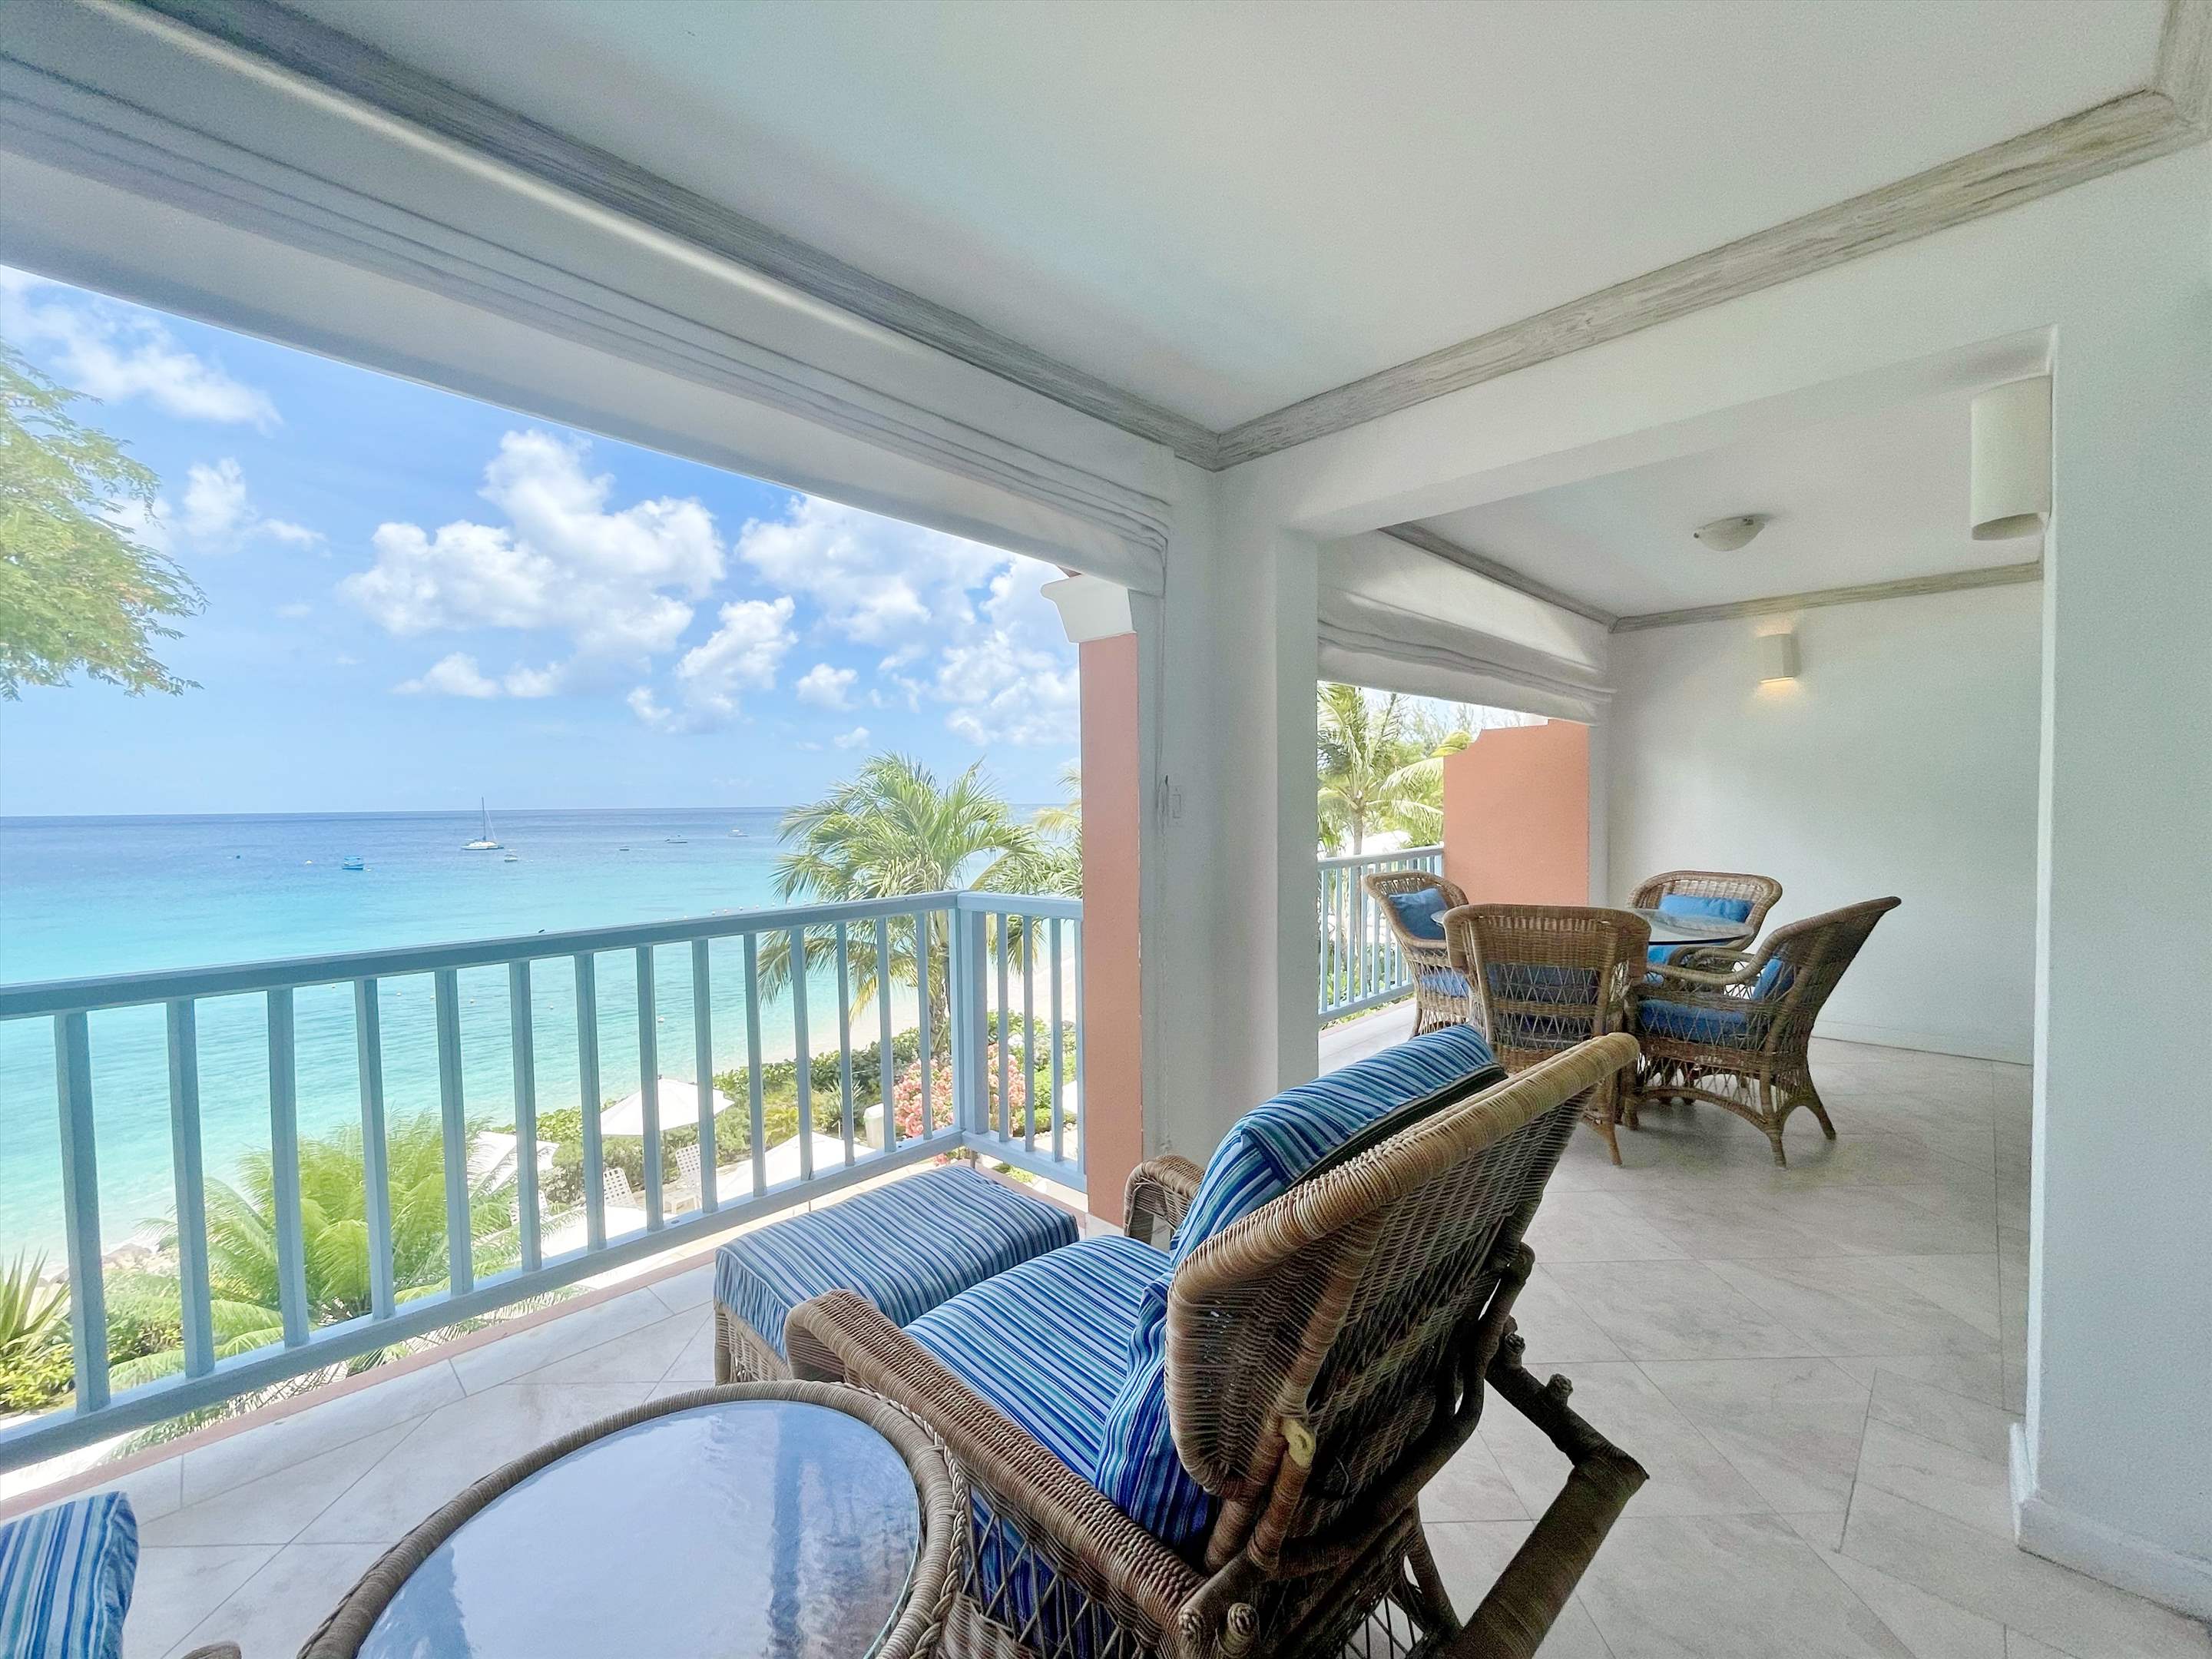 Villas on the Beach 303, 1 bedroom, 1 bedroom apartment in St. James & West Coast, Barbados Photo #2